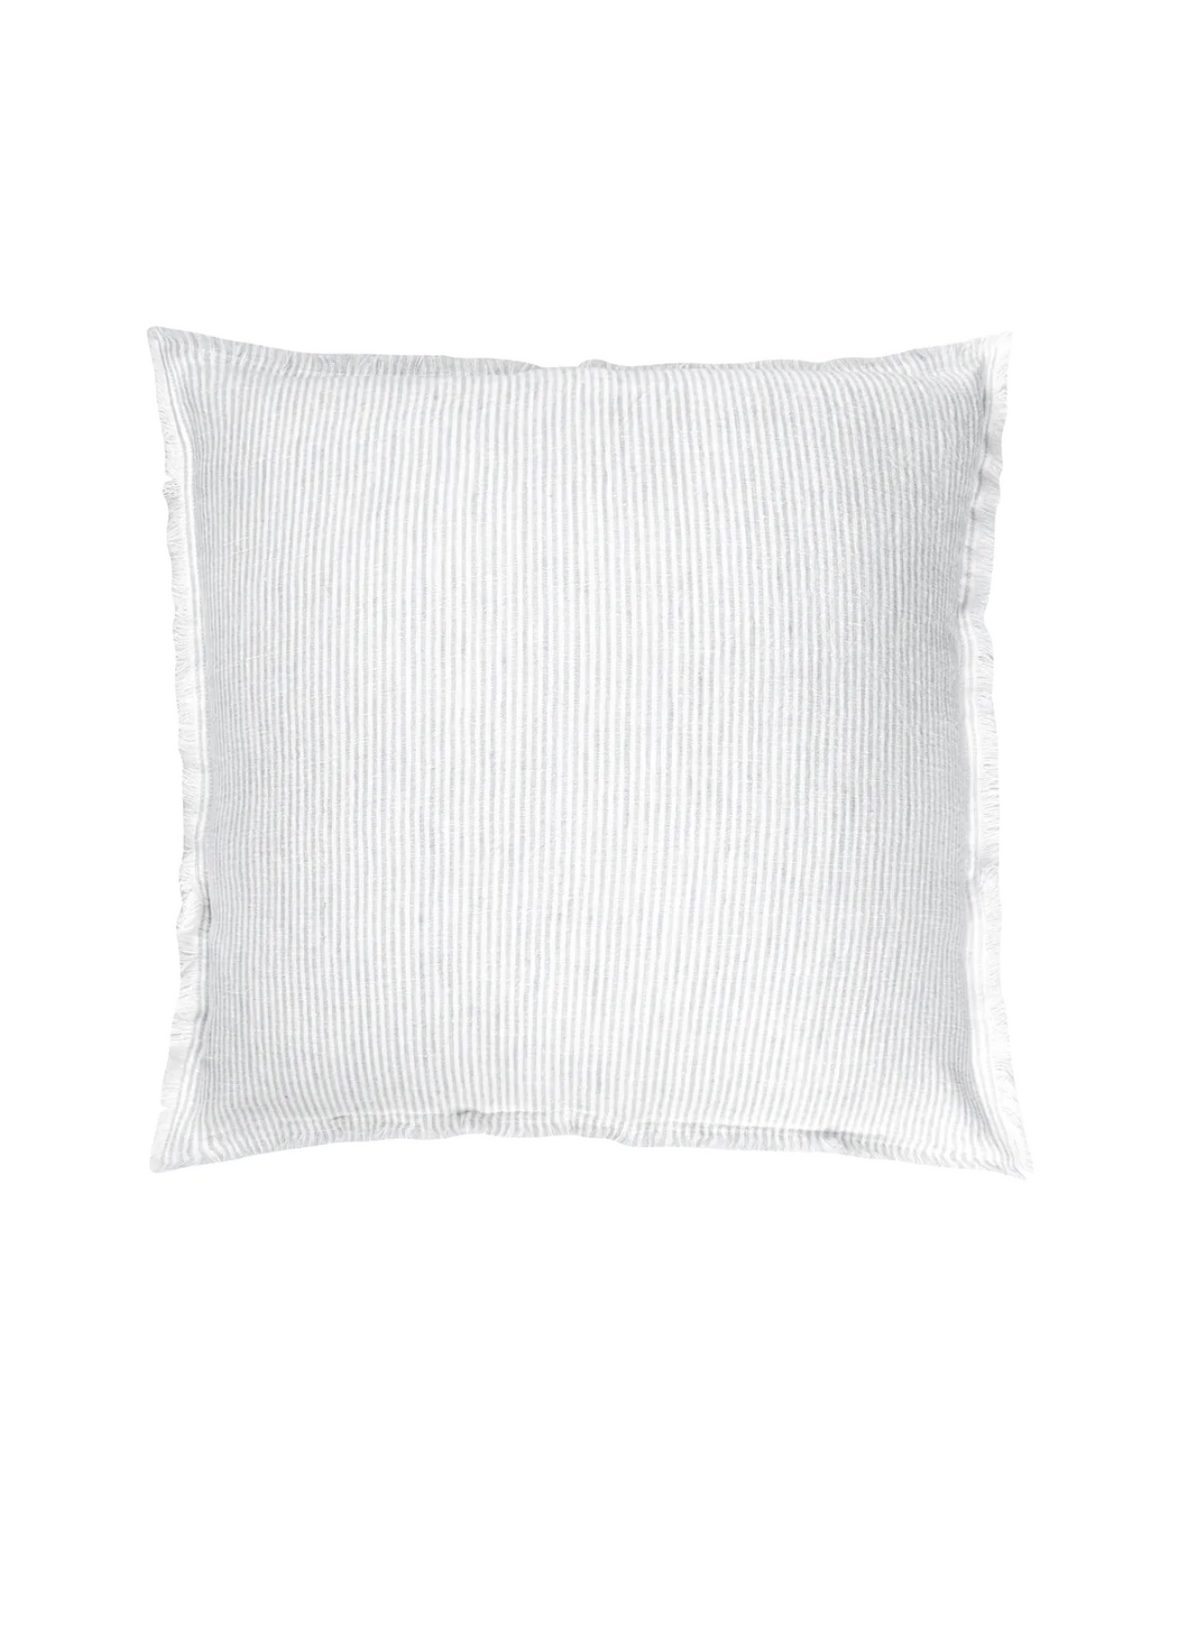 Light Grey & White Striped Linen Pillows